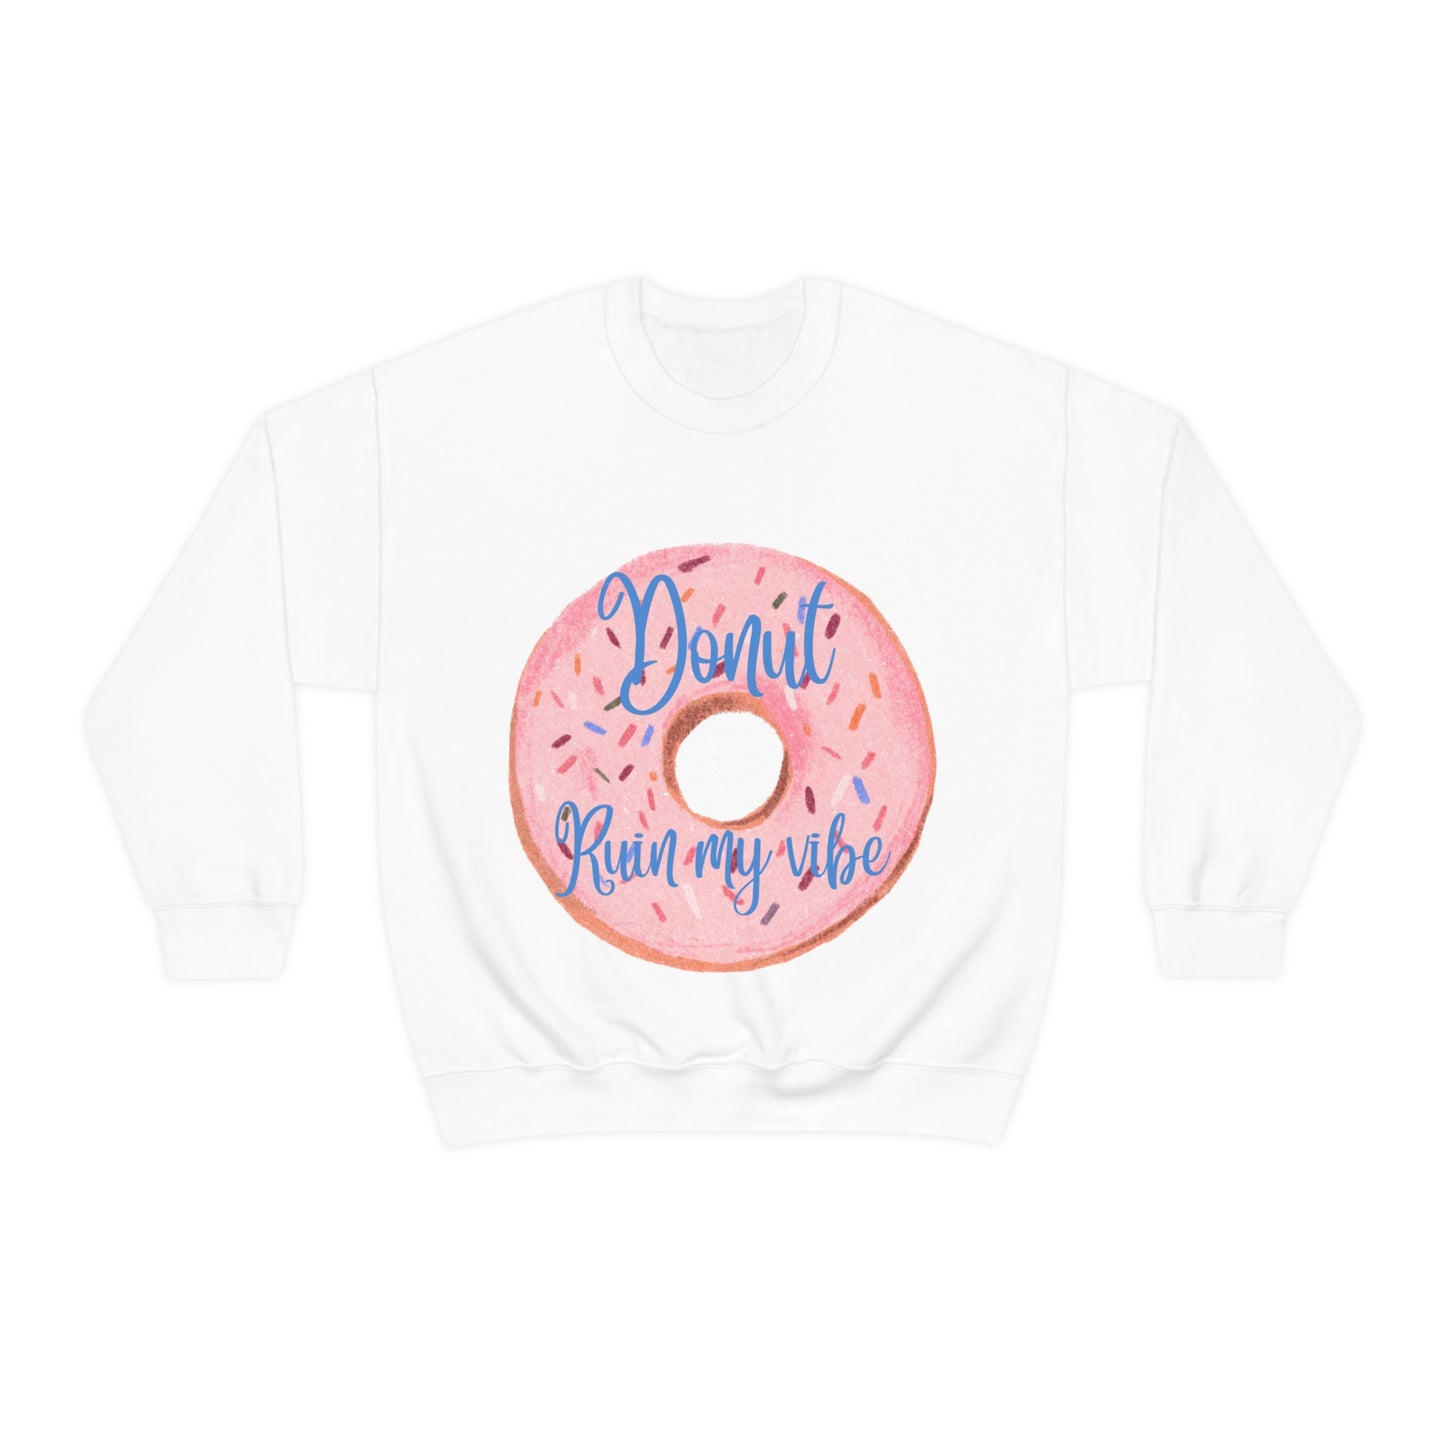 Donut Ruin my vibe Crewneck Sweatshirt